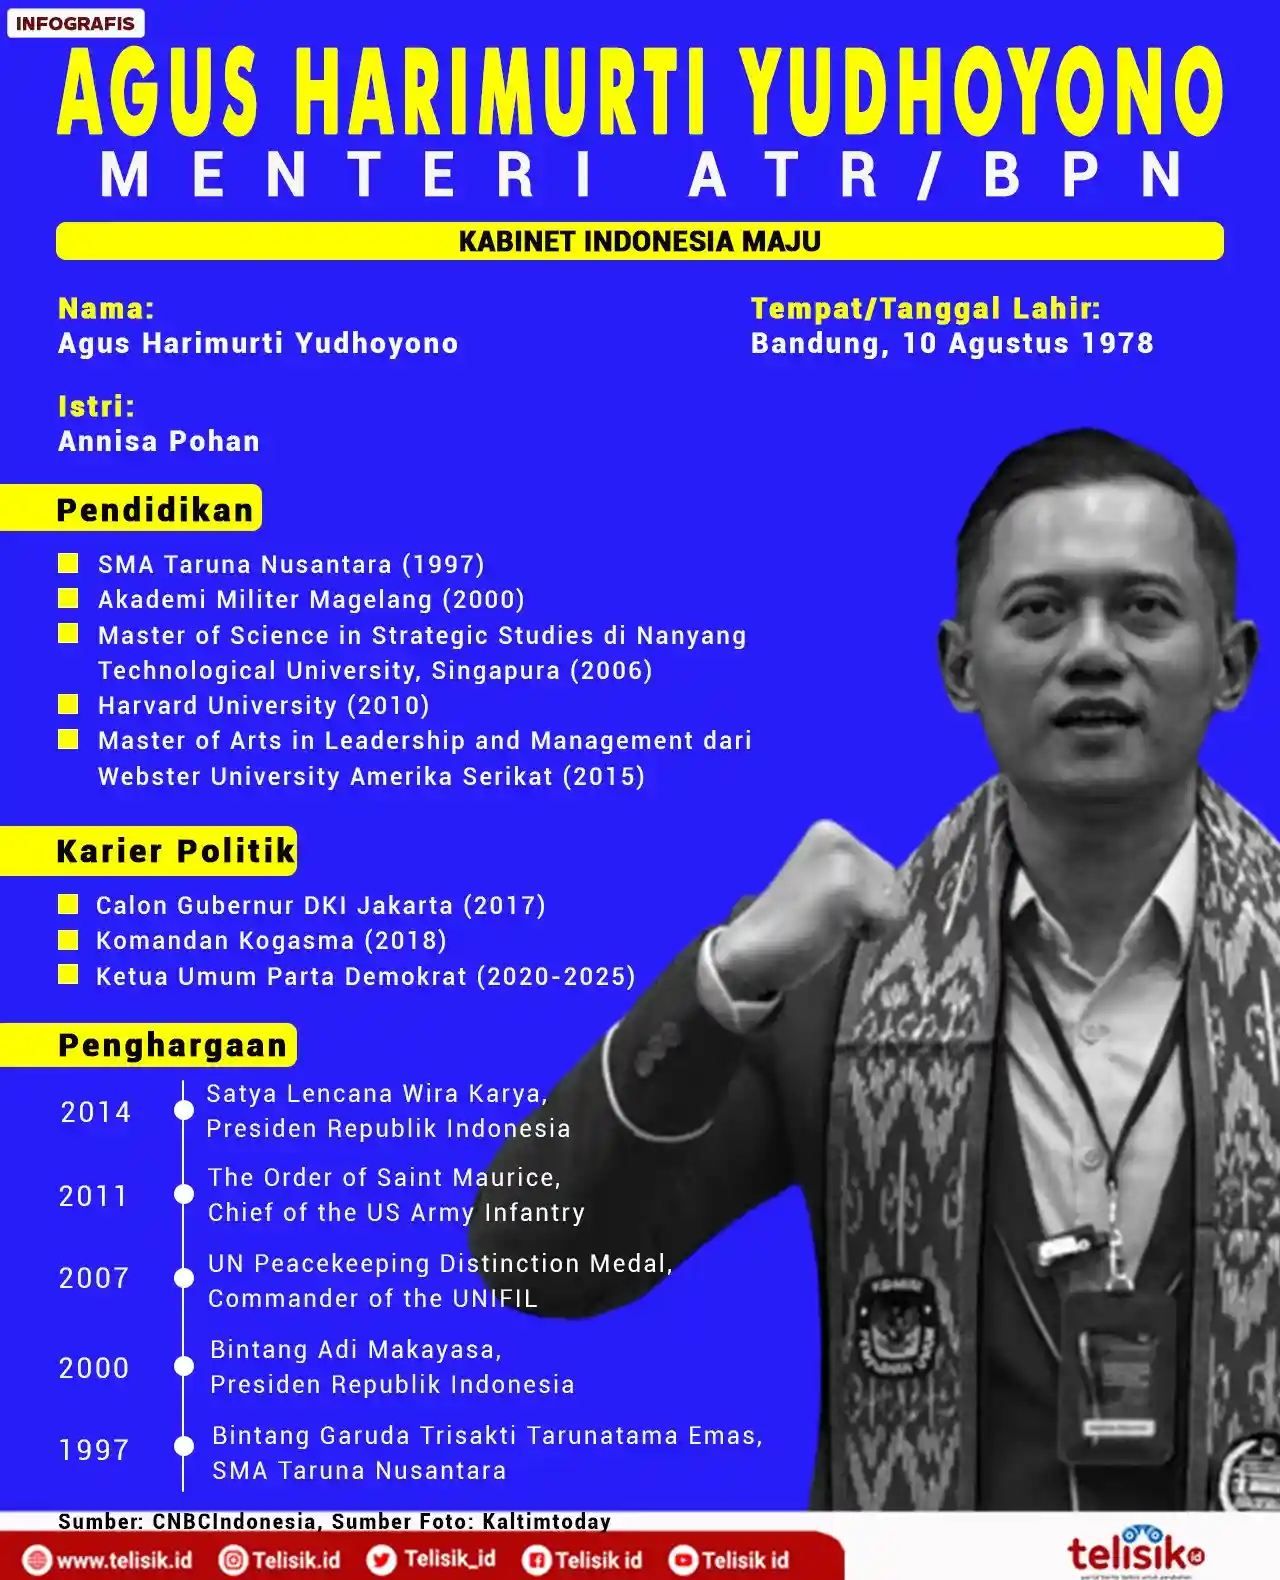 Infografis: Profil AHY, Lulusan Akmil Kini jadi Menteri ATR/BPN Kabinet Jokowi